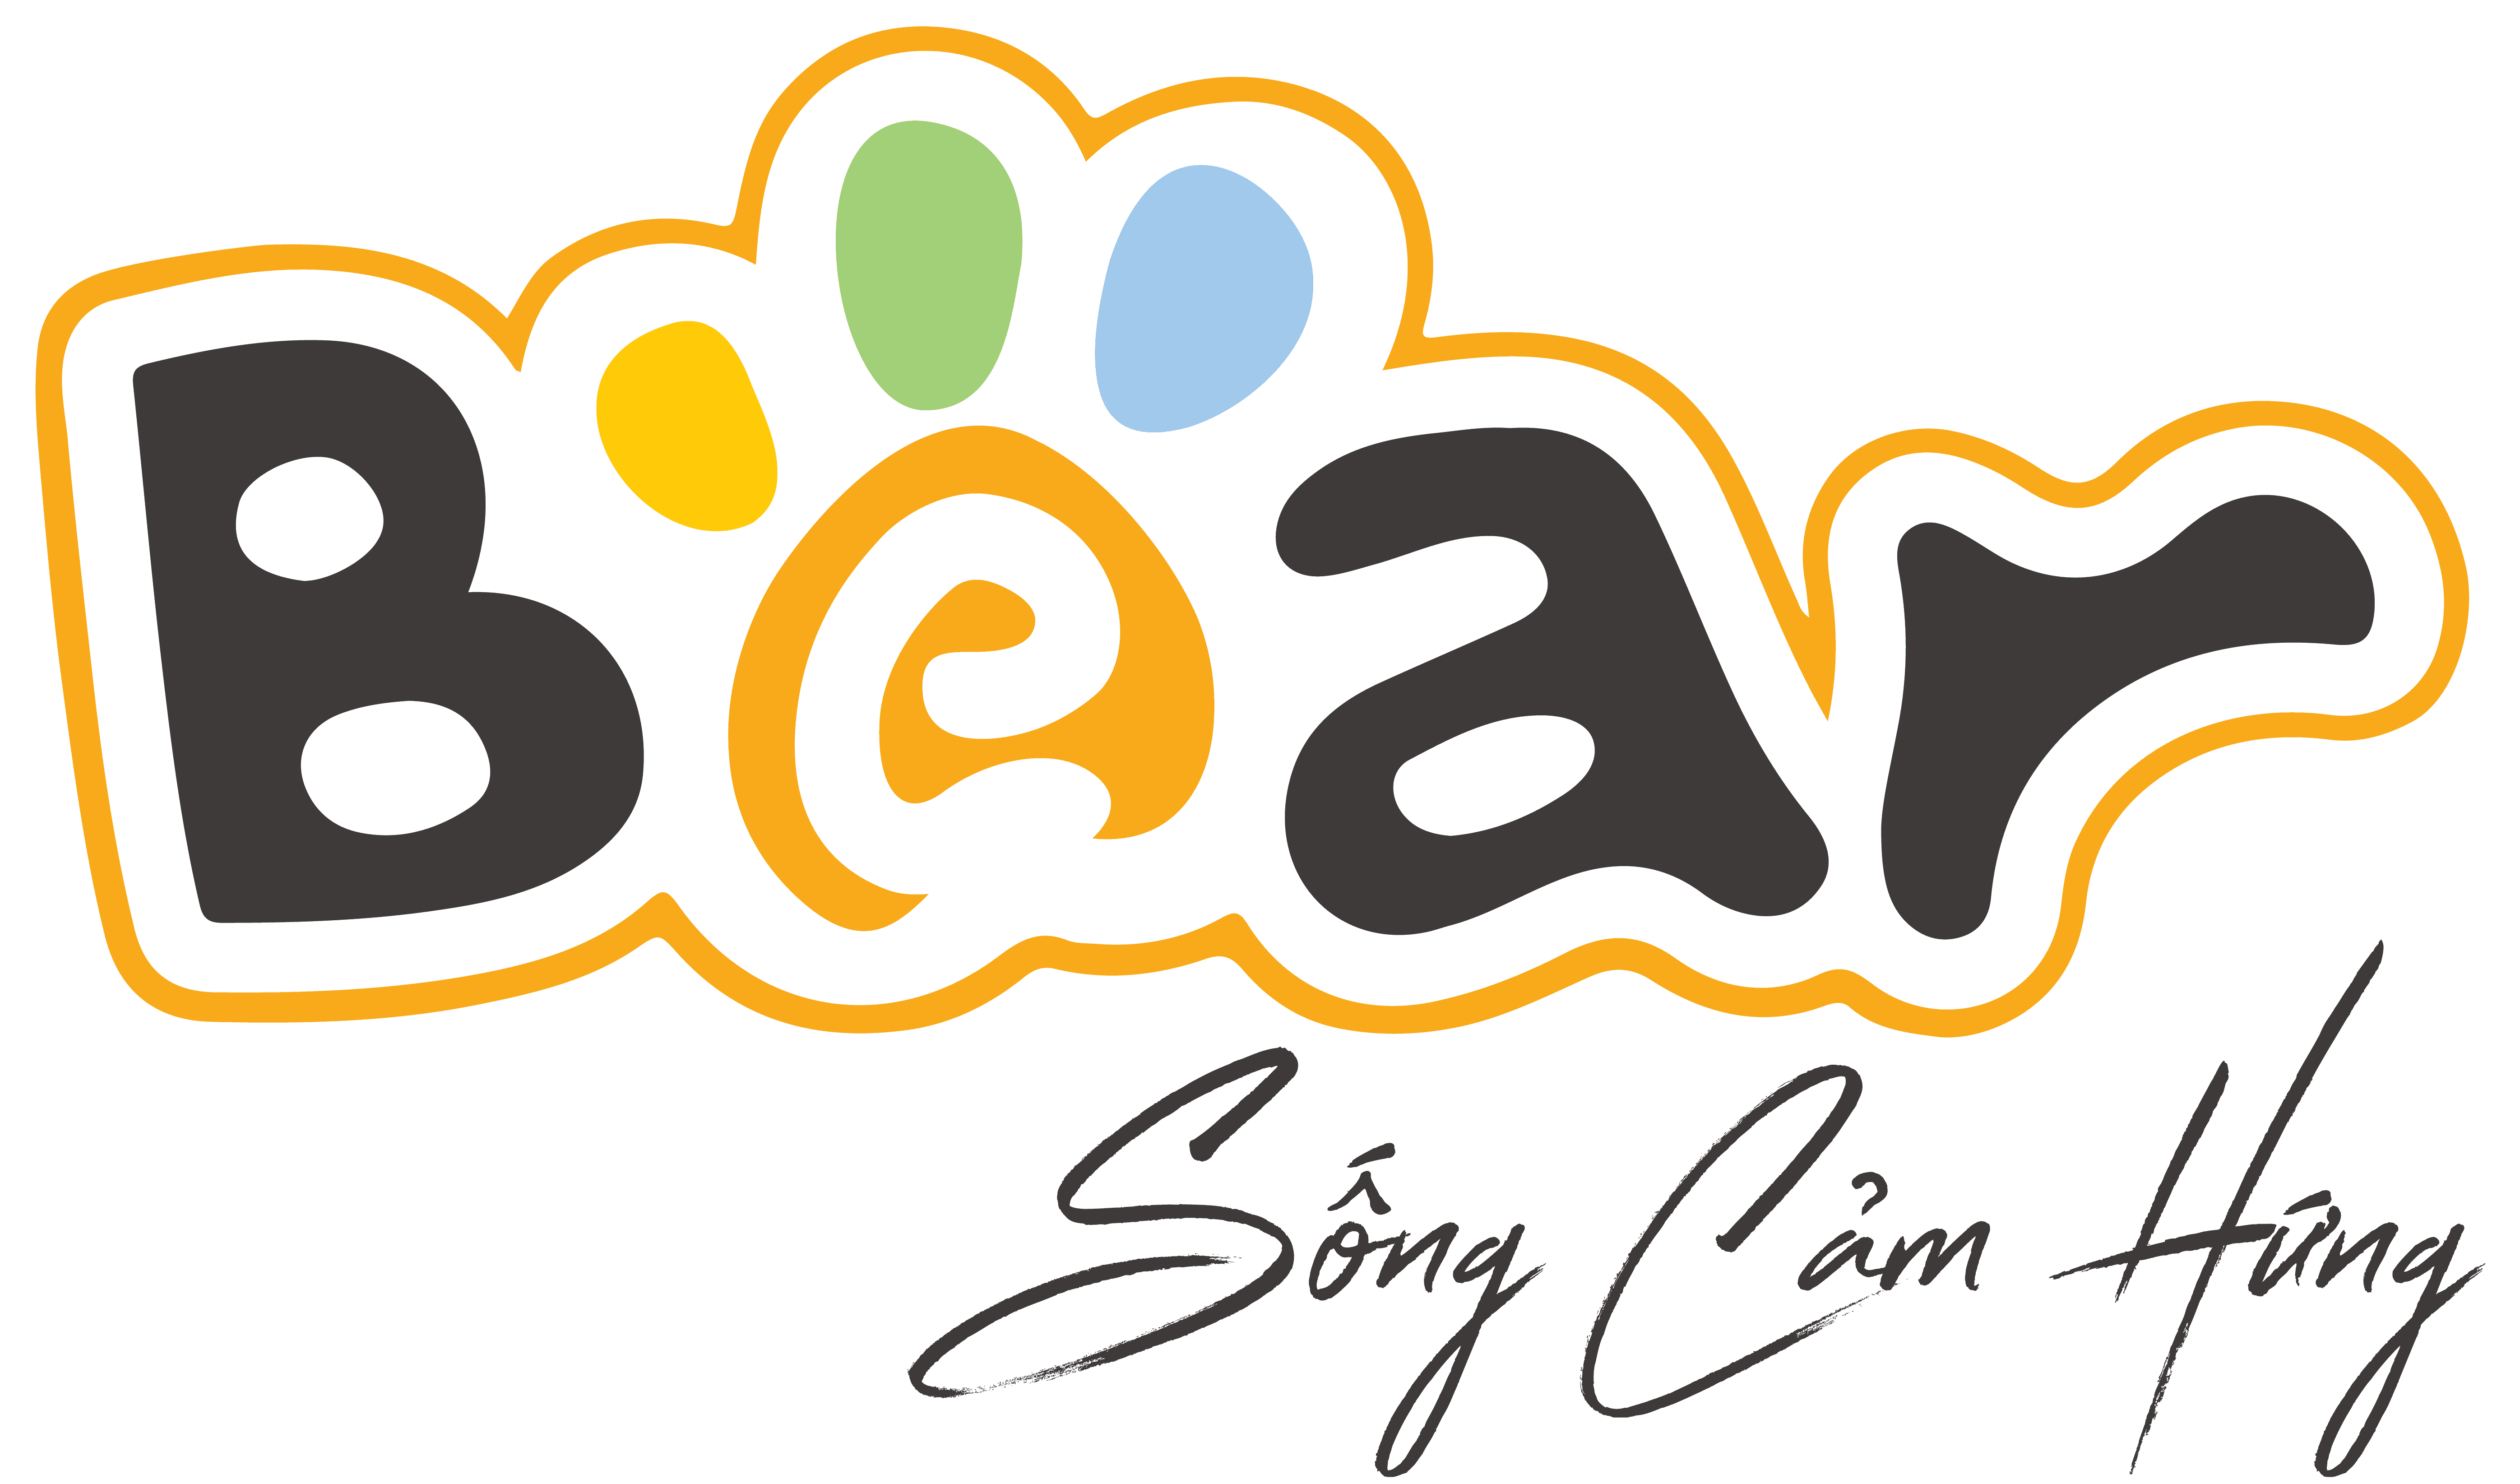 bear viet nam logo